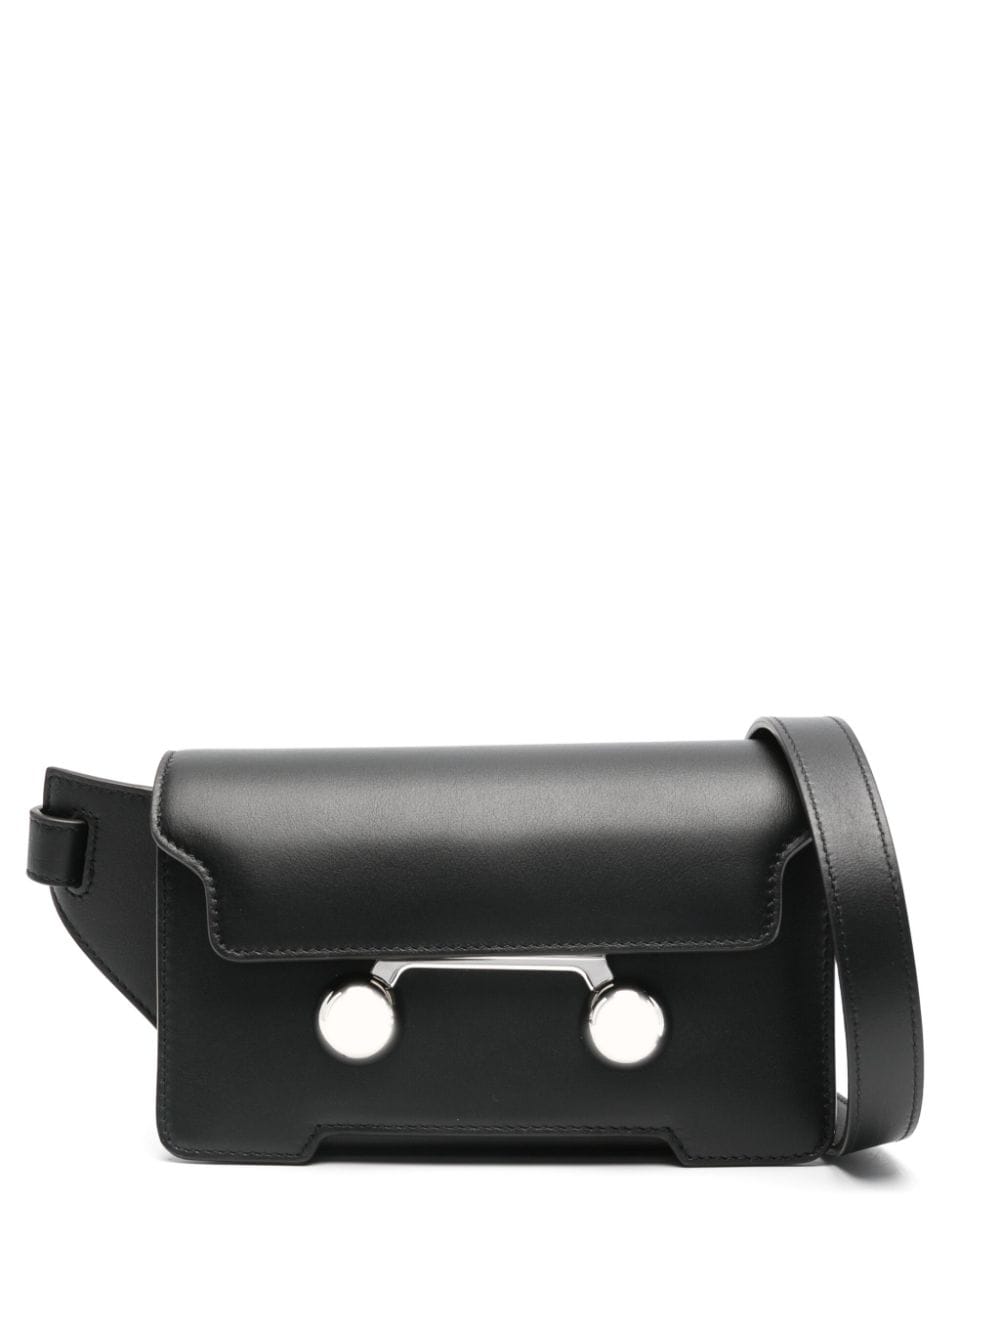 Marni Trunkaroo Leather Messenger Bag In Black